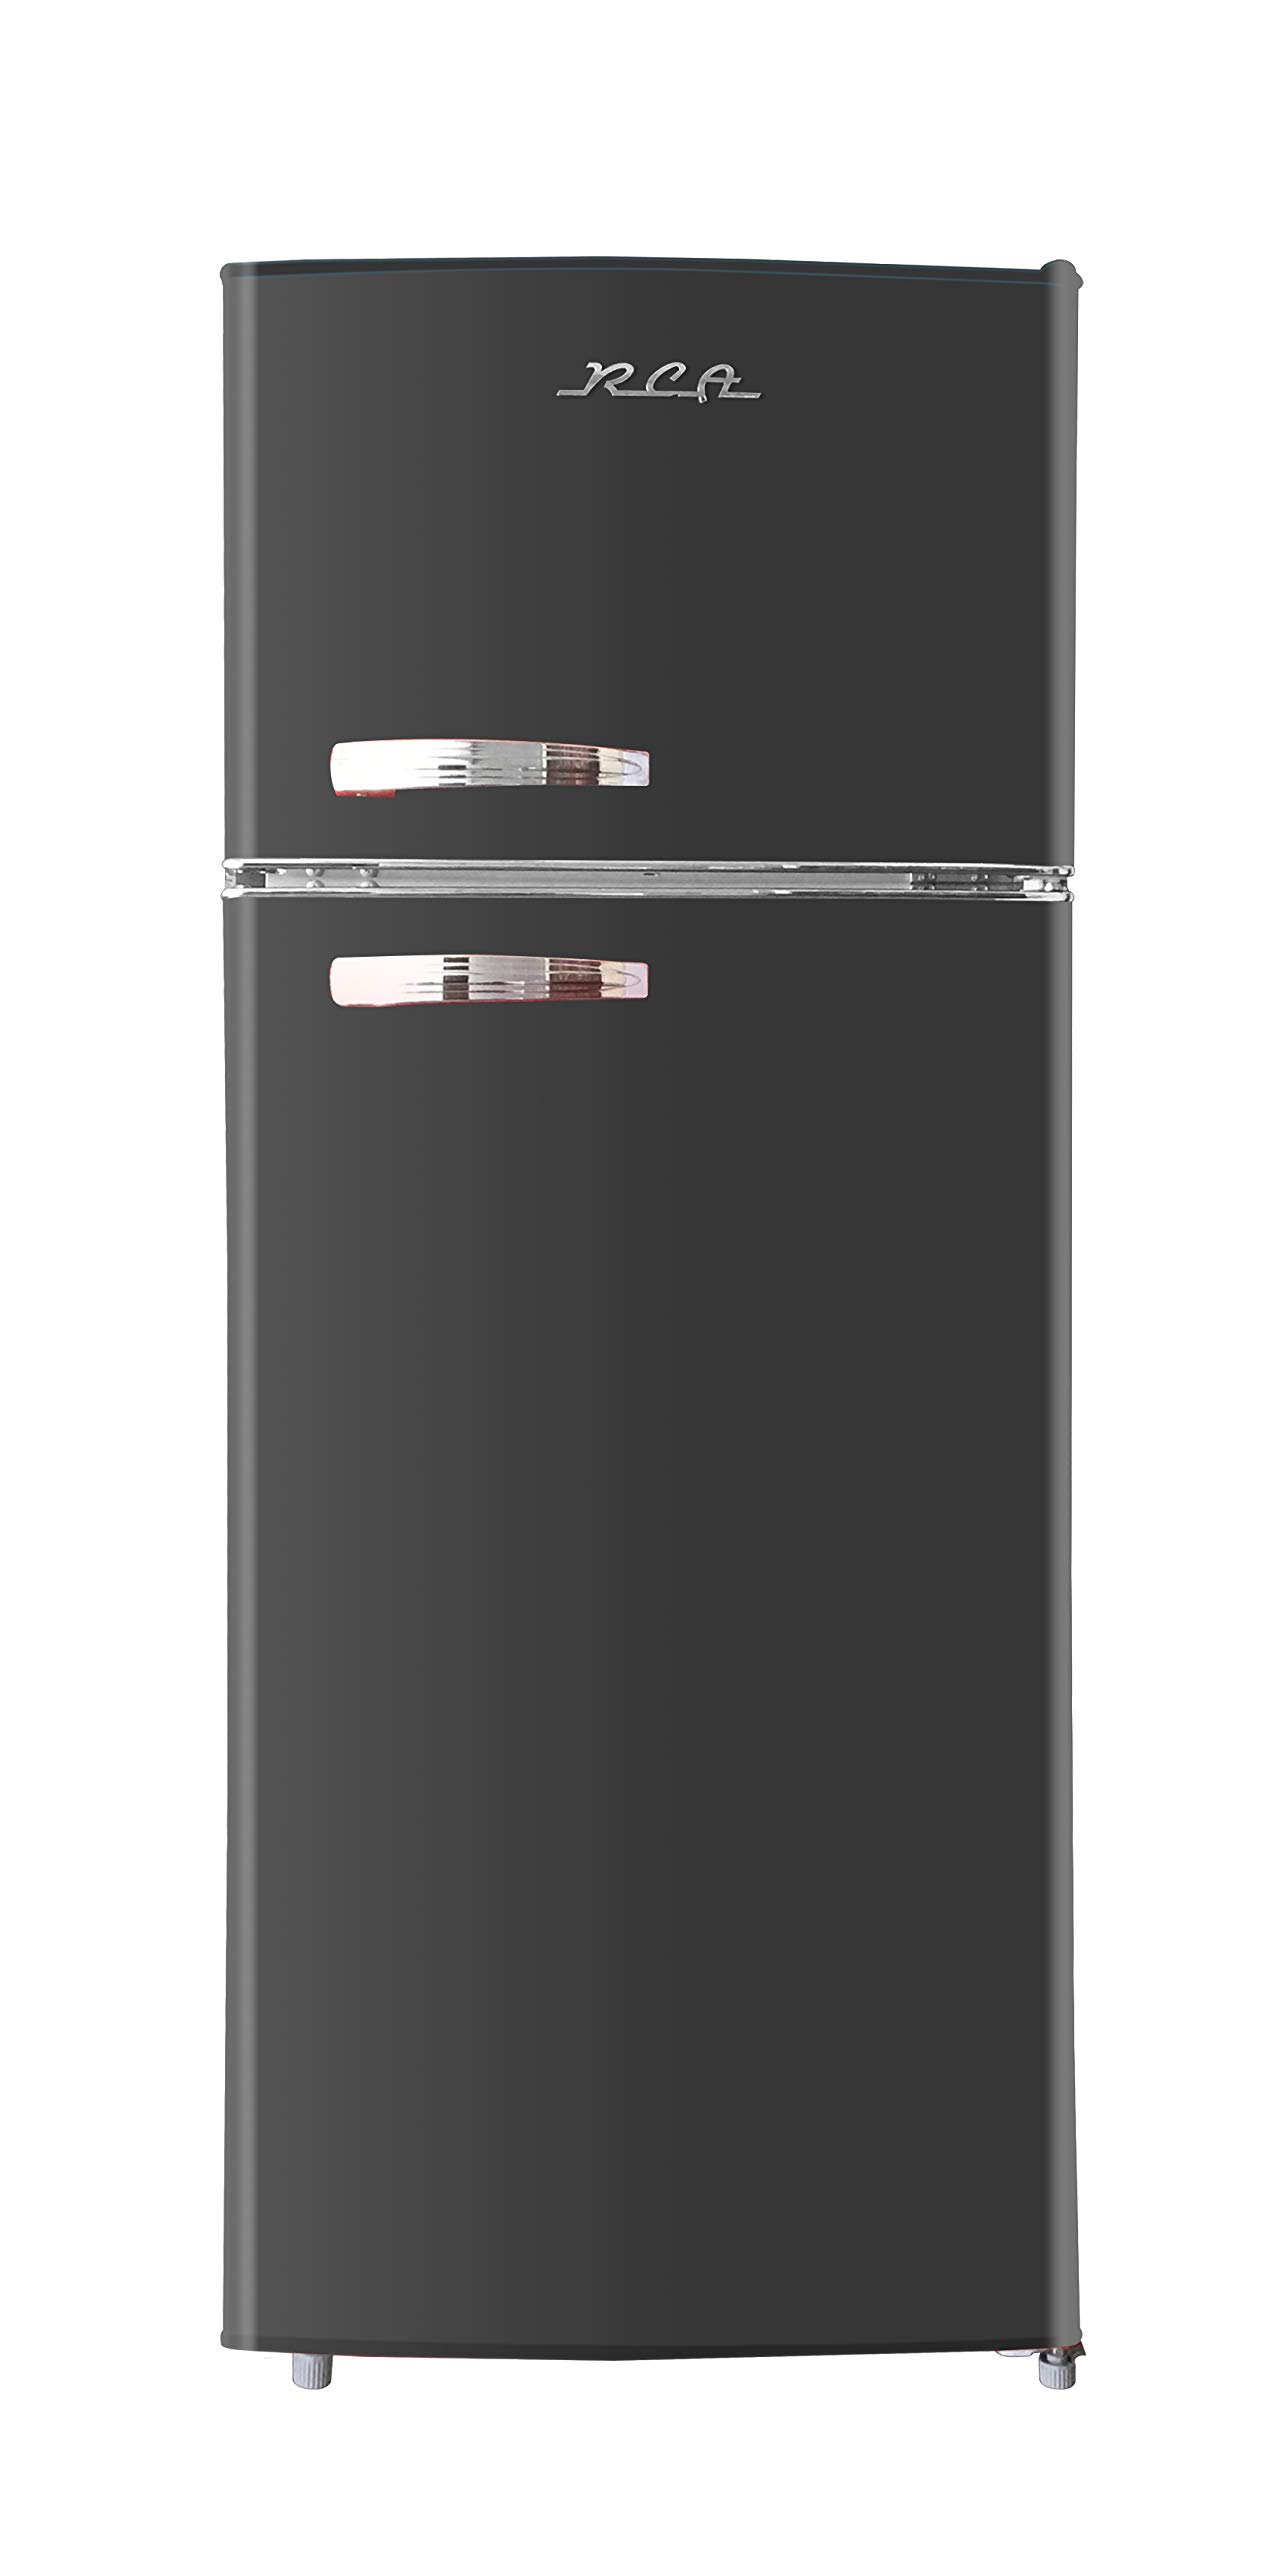 RCA RFR1055、トップフリーザー付きレトロアパートメントサイズ冷蔵庫 - 10立方フィートのストレージを備えた2ドア冷蔵庫